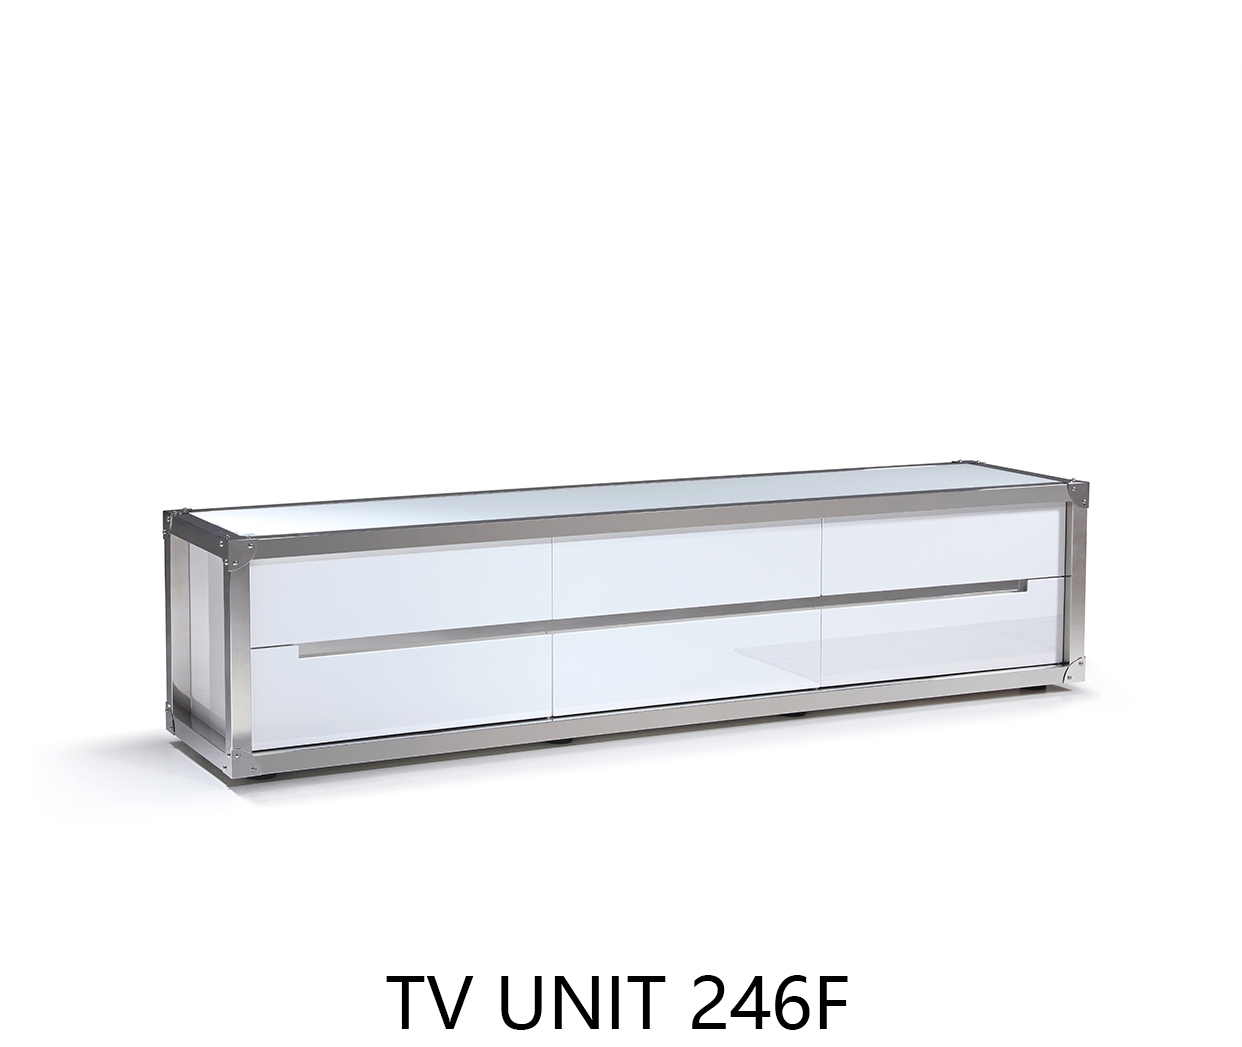 TV UNIT 246F